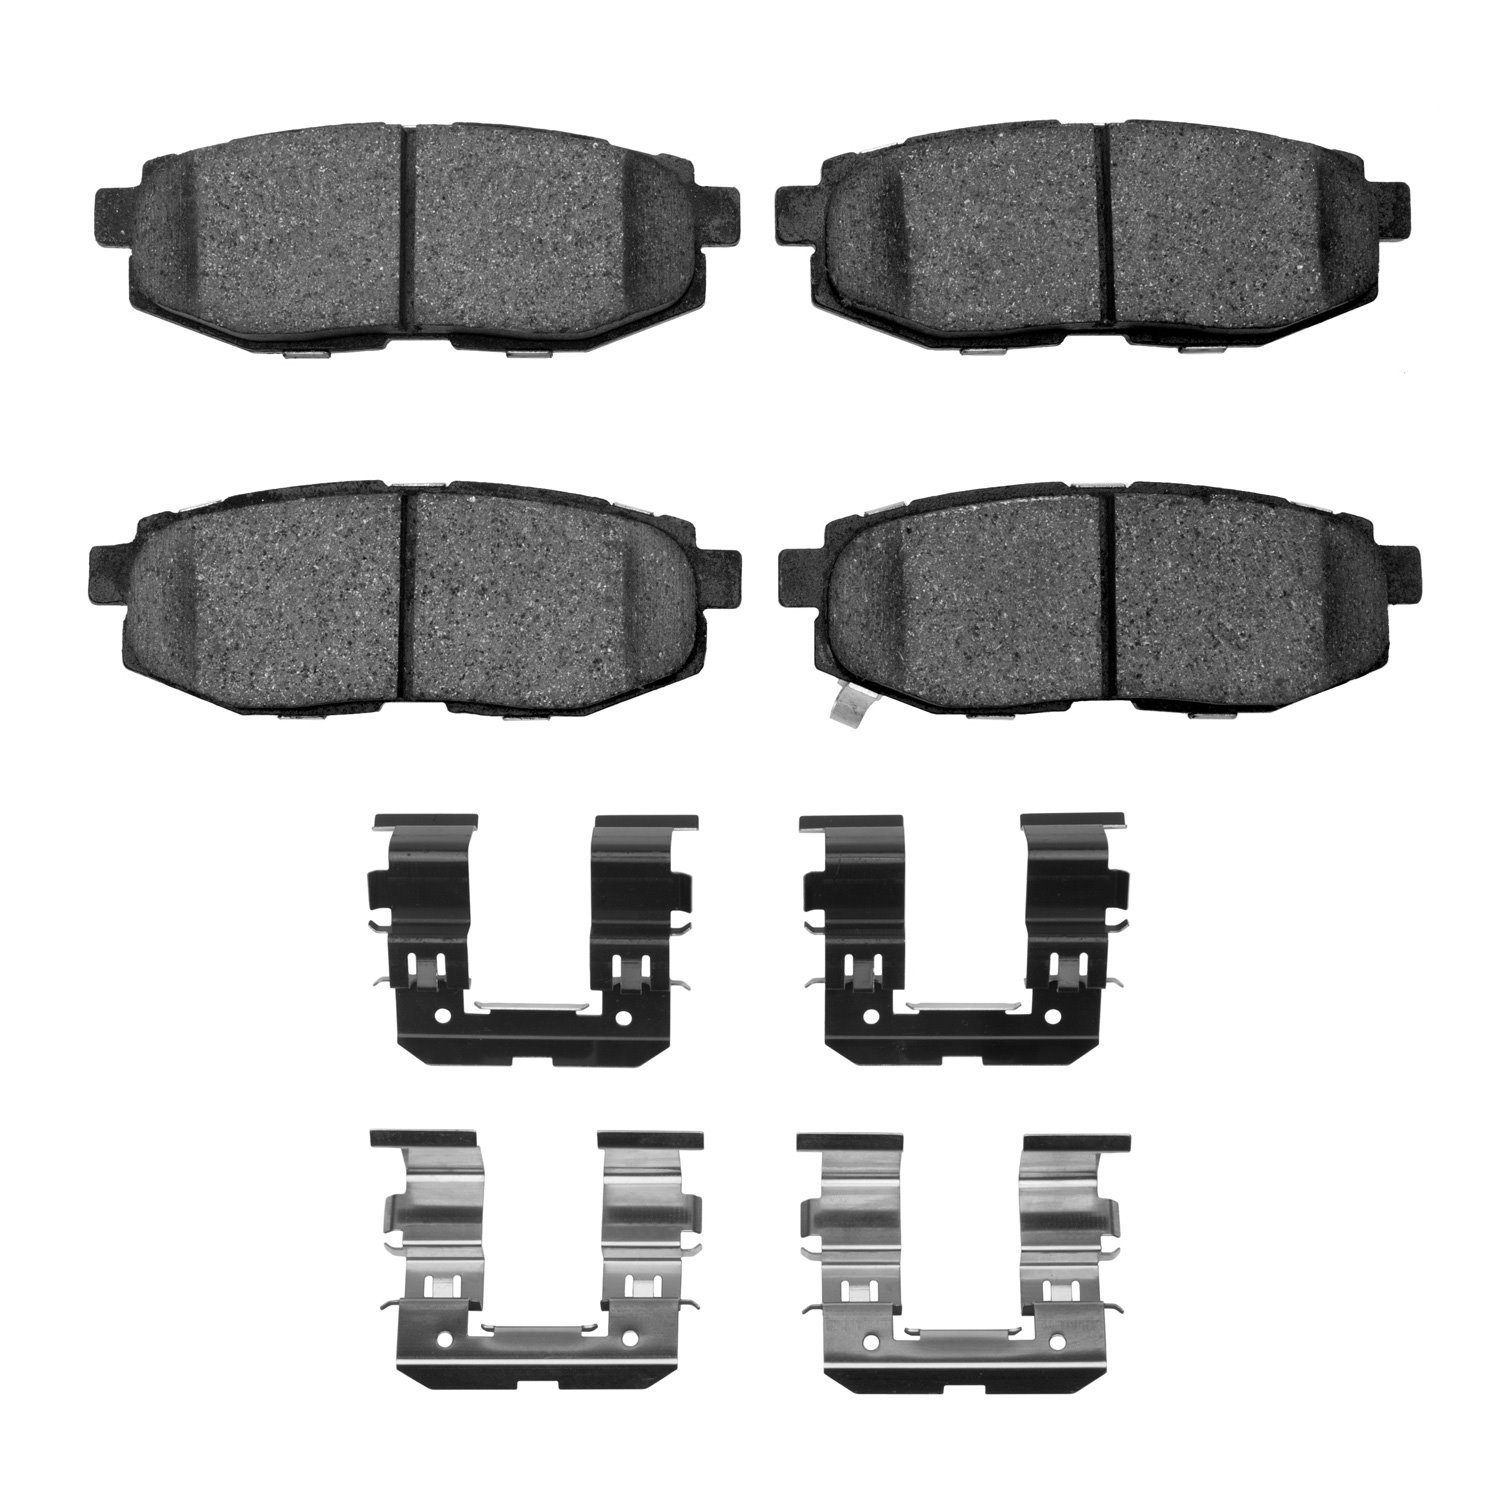 1115-1124-01 Active Performance Brake Pads & Hardware Kit, Fits Select Multiple Makes/Models, Position: Rear